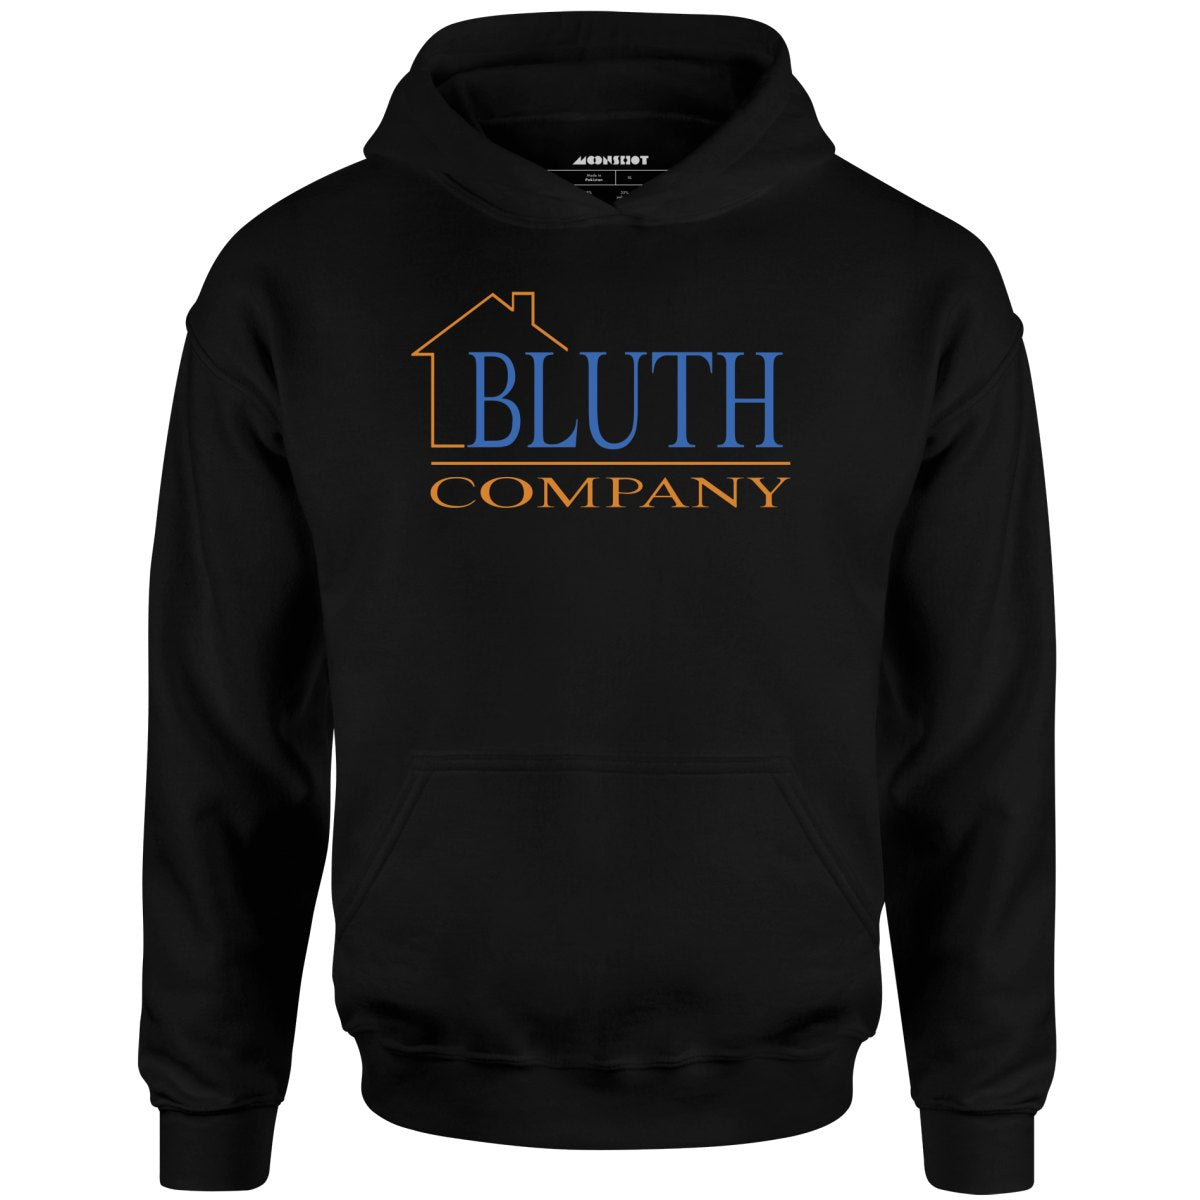 Bluth Company - Unisex Hoodie